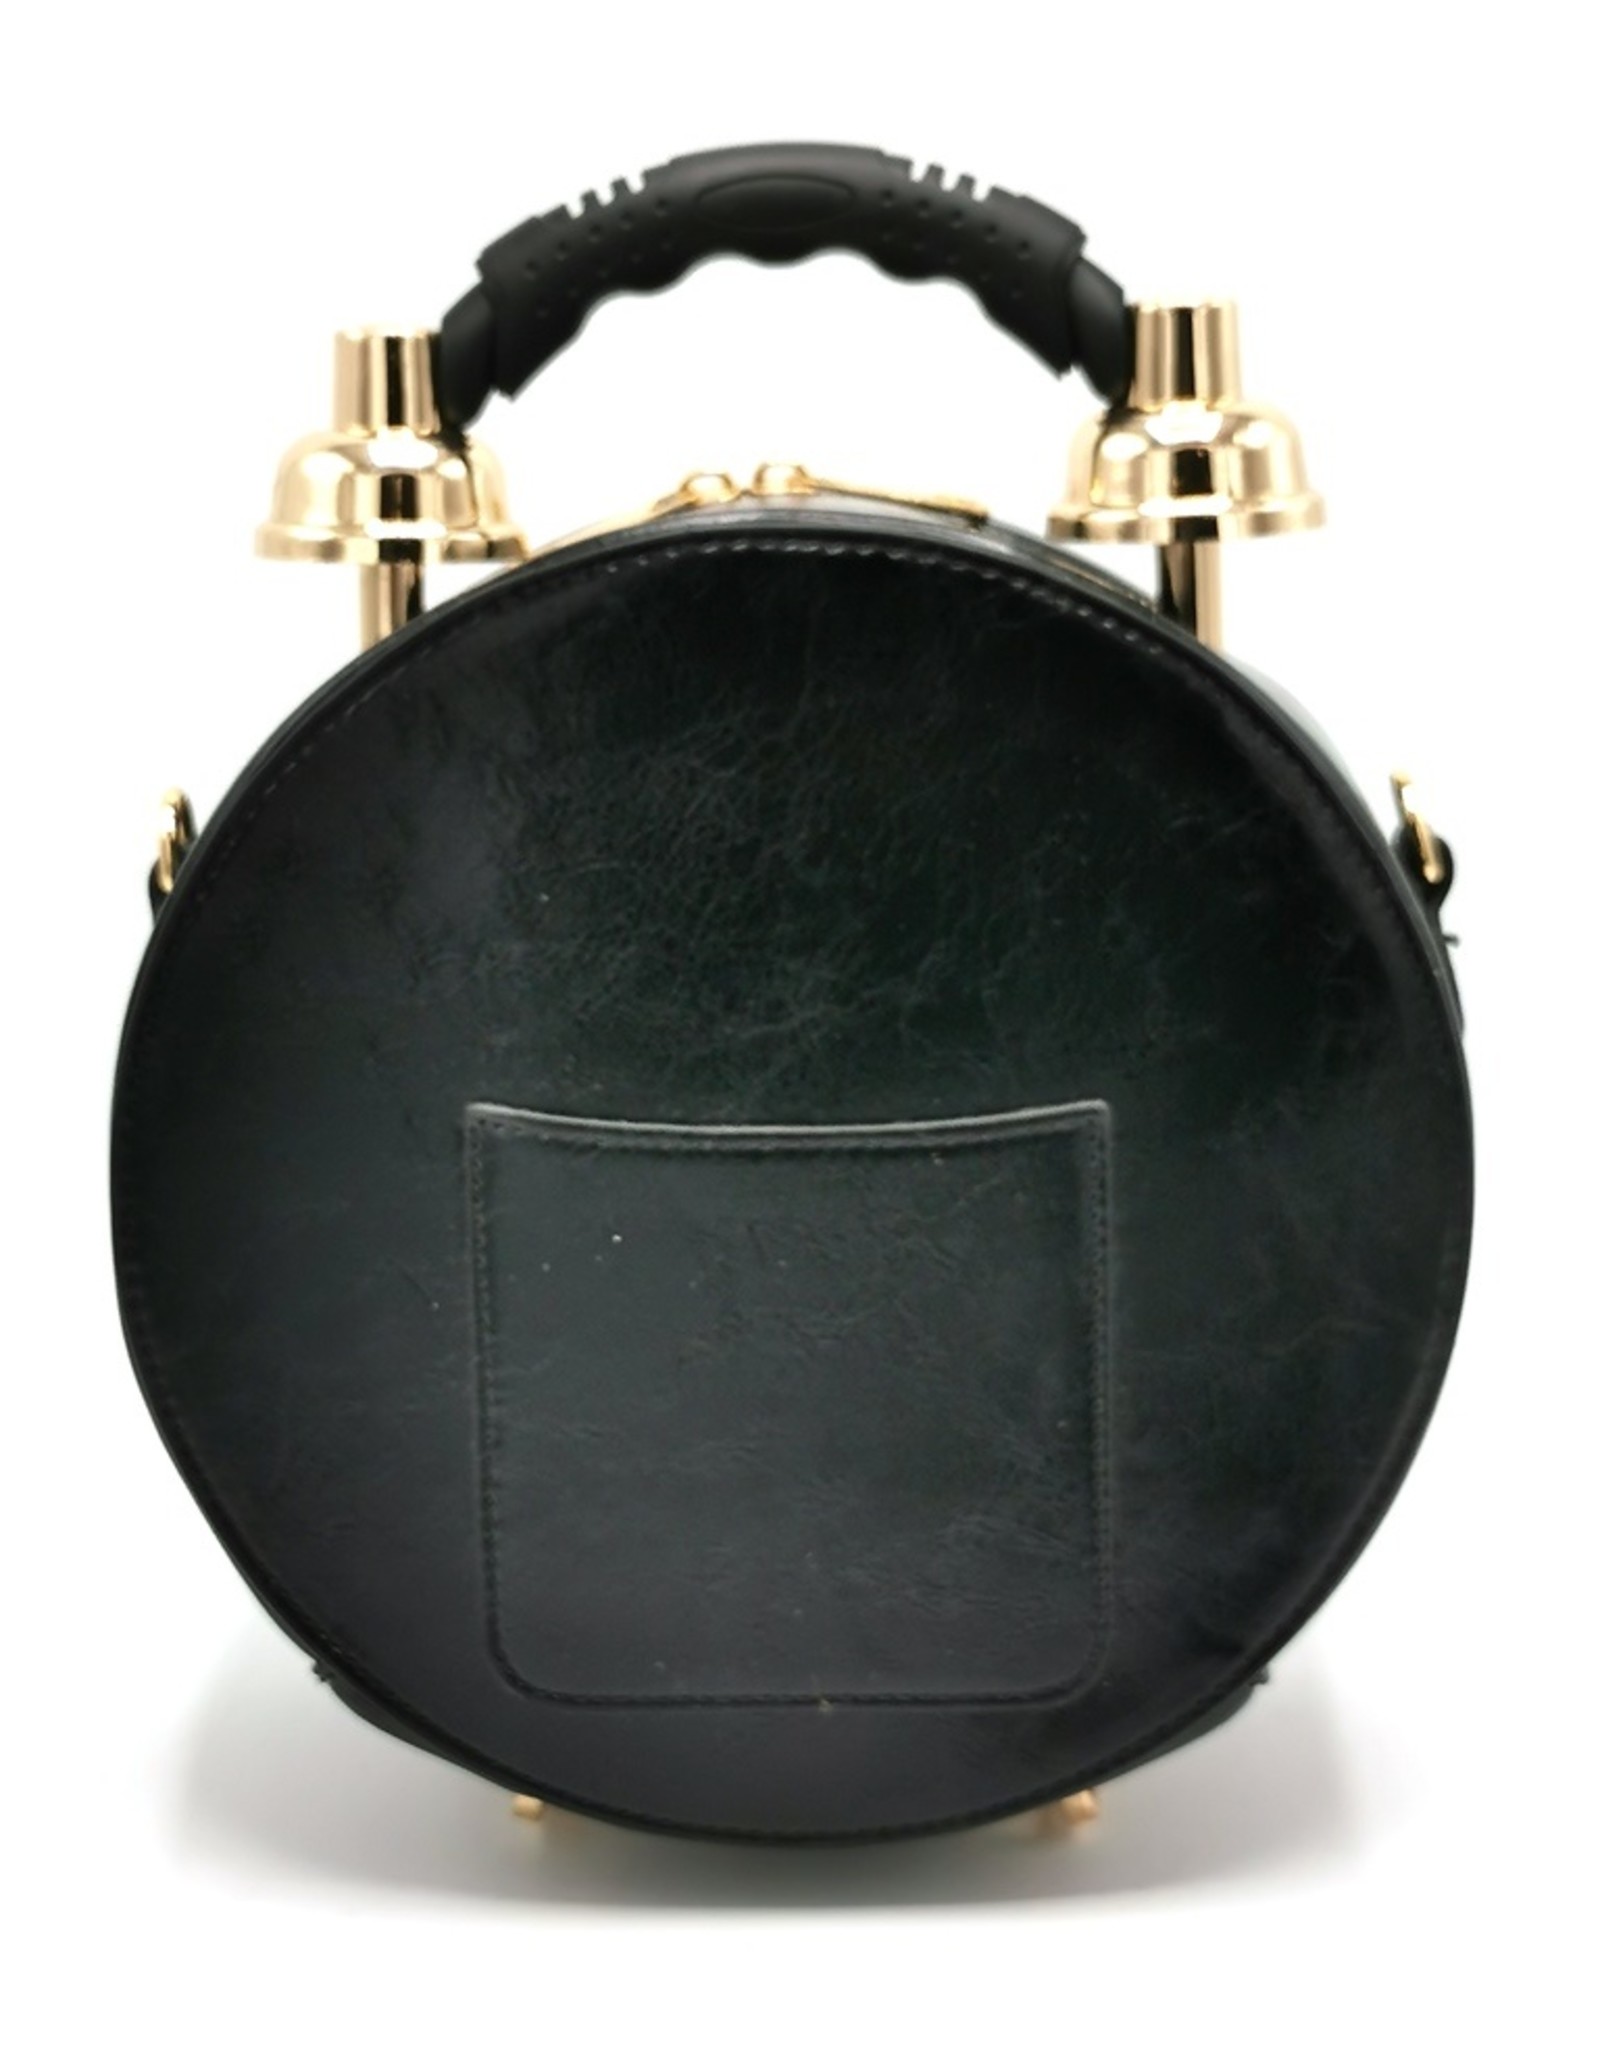 Magic Bags Steampunk tassen Gotic tassen - Klok Handtas met Echte Klok zwart (medium)